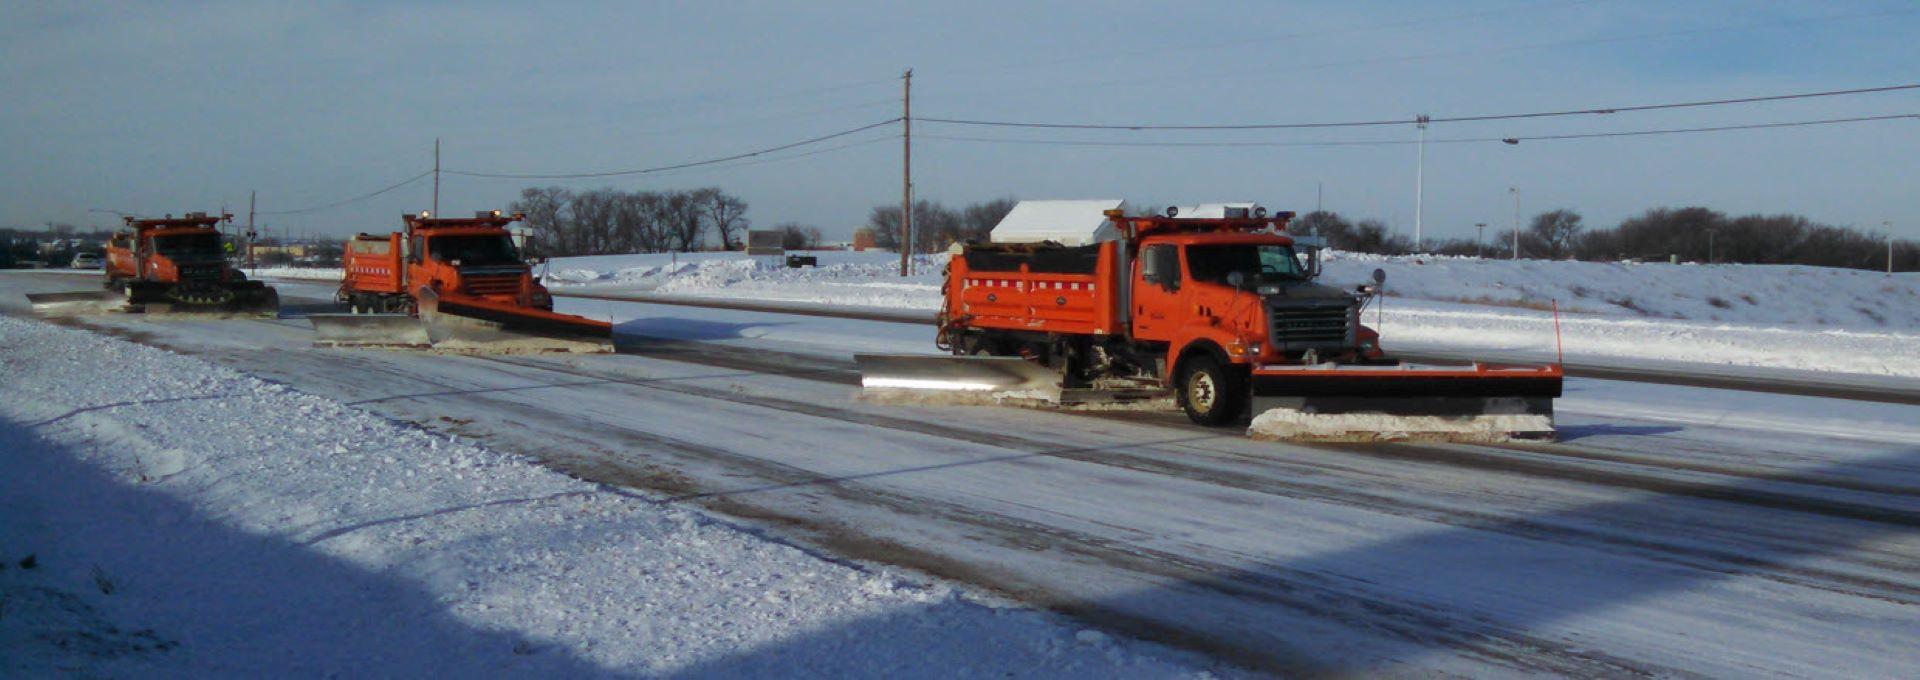 Public Works Snowplow Trucks